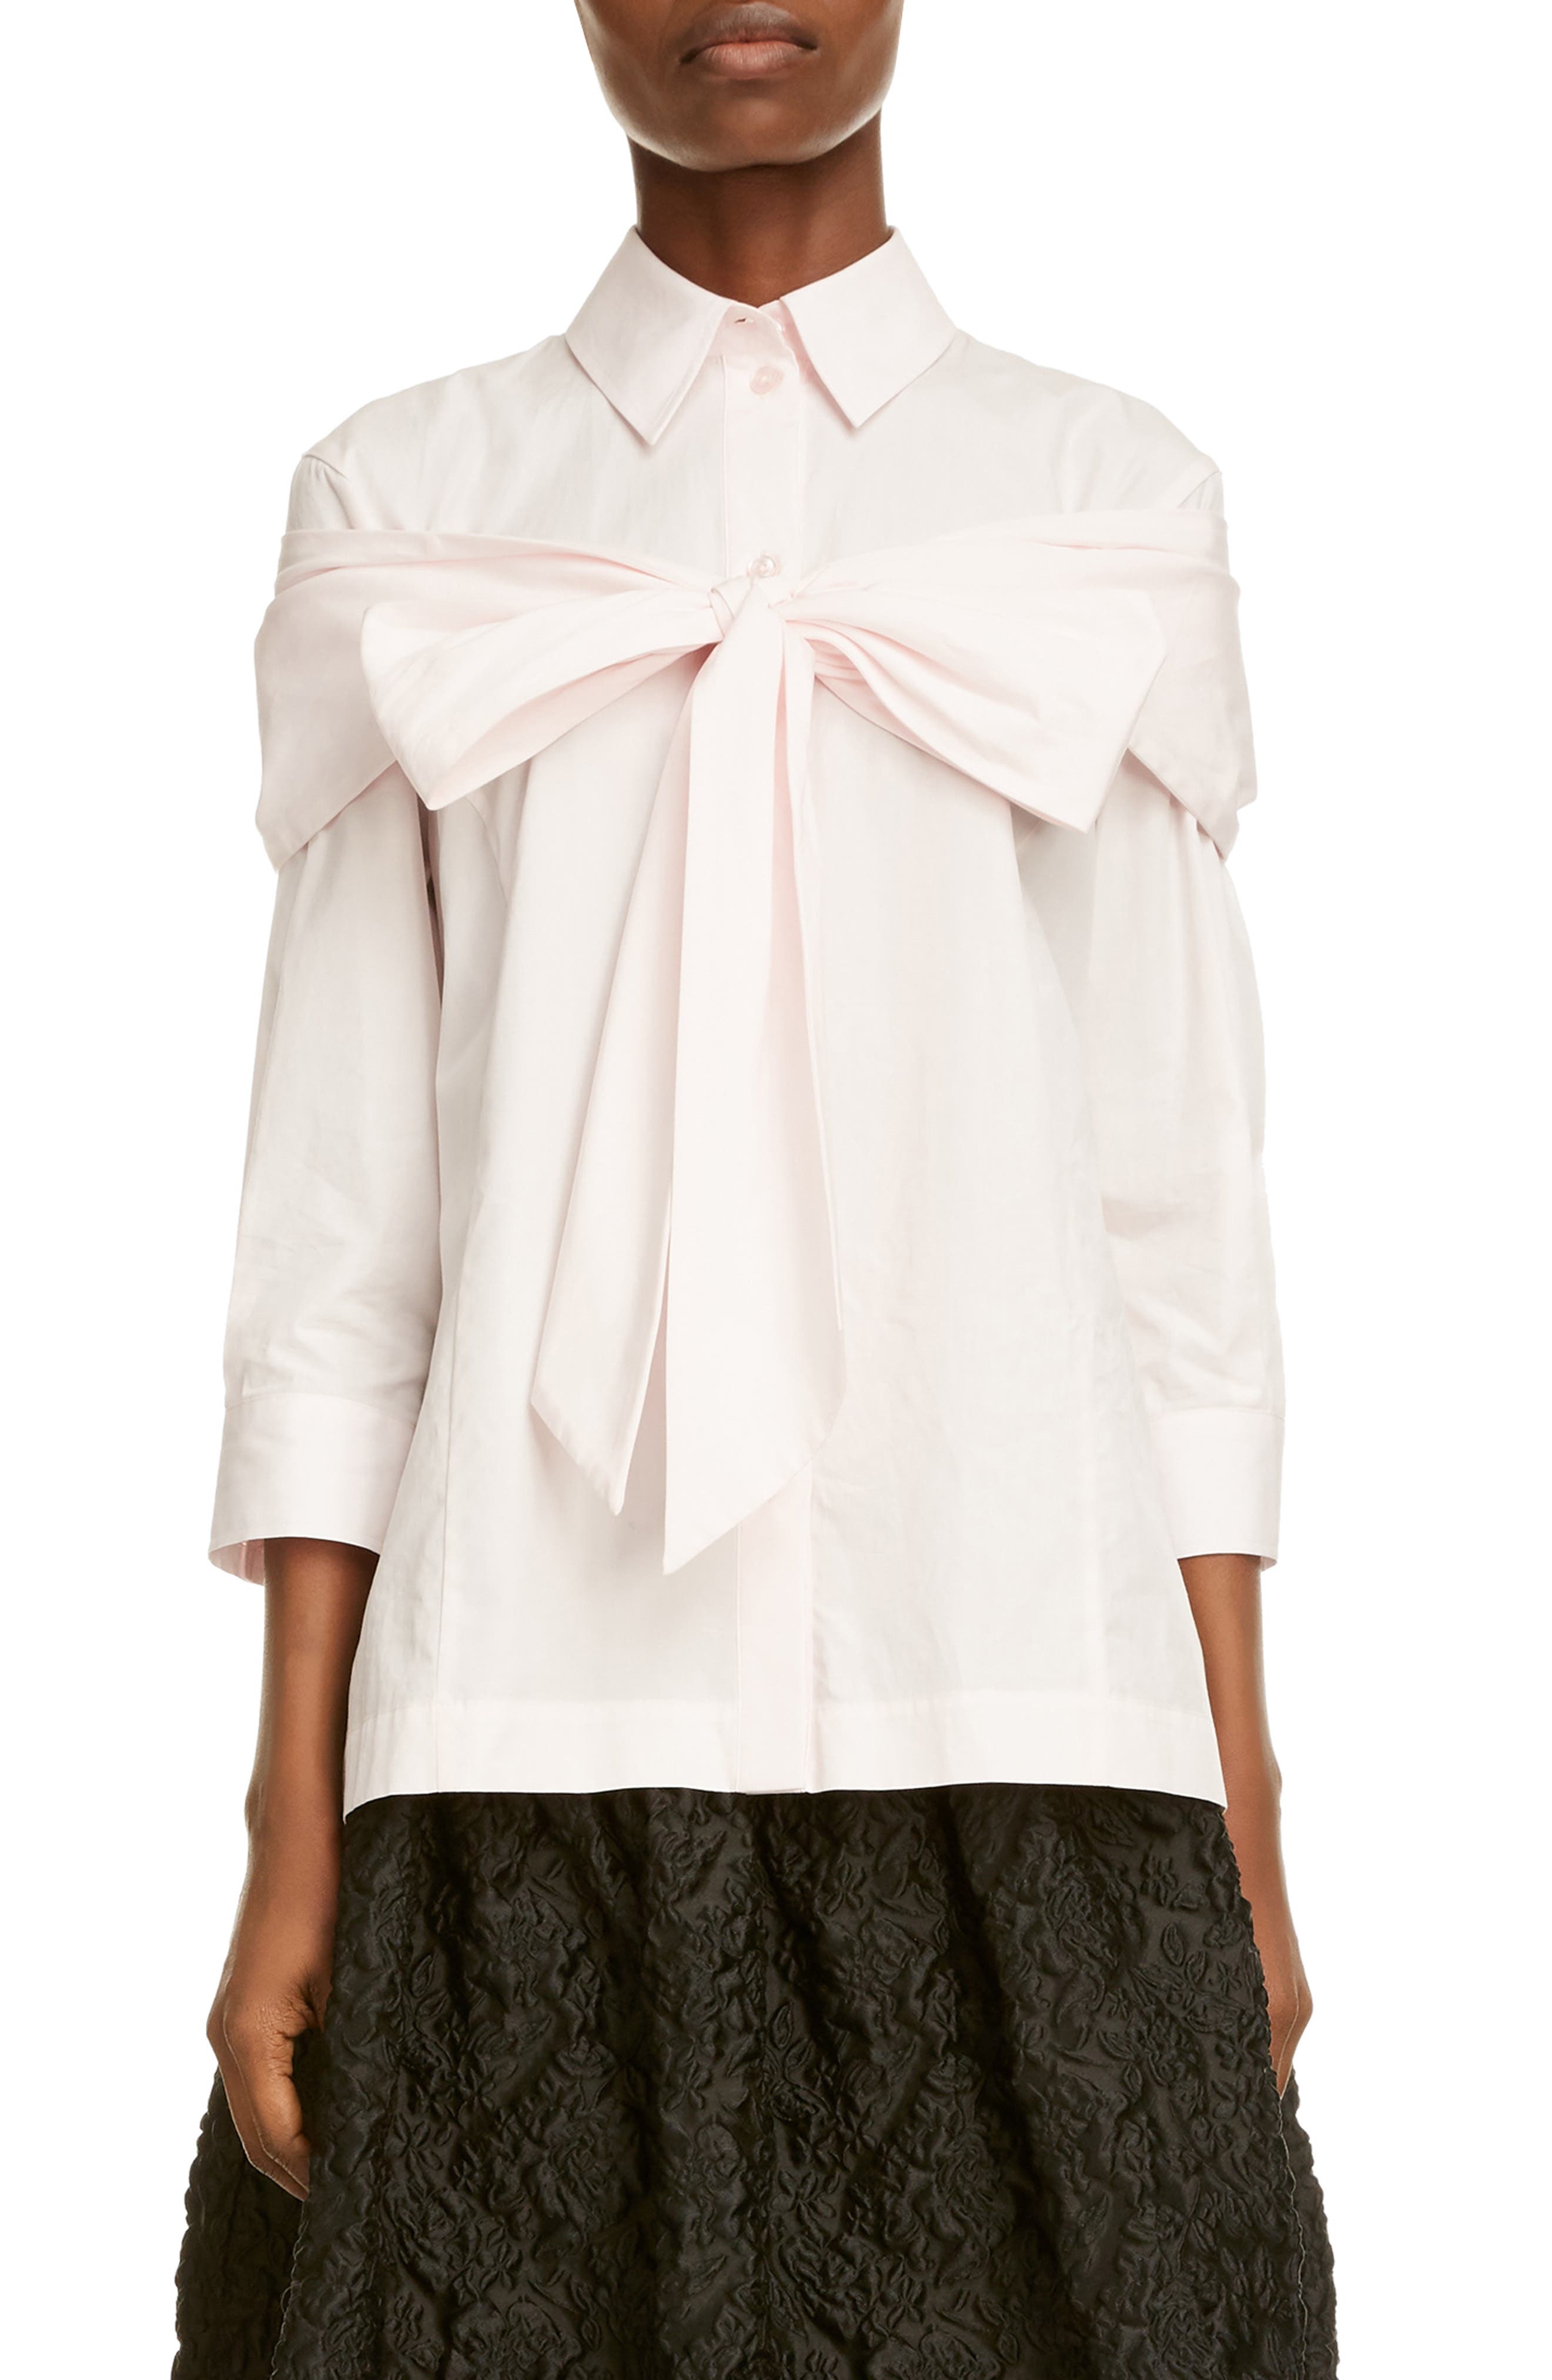 UPC 000050050109 product image for Women's Simone Rocha Bow Detail Poplin Button-Up Shirt | upcitemdb.com